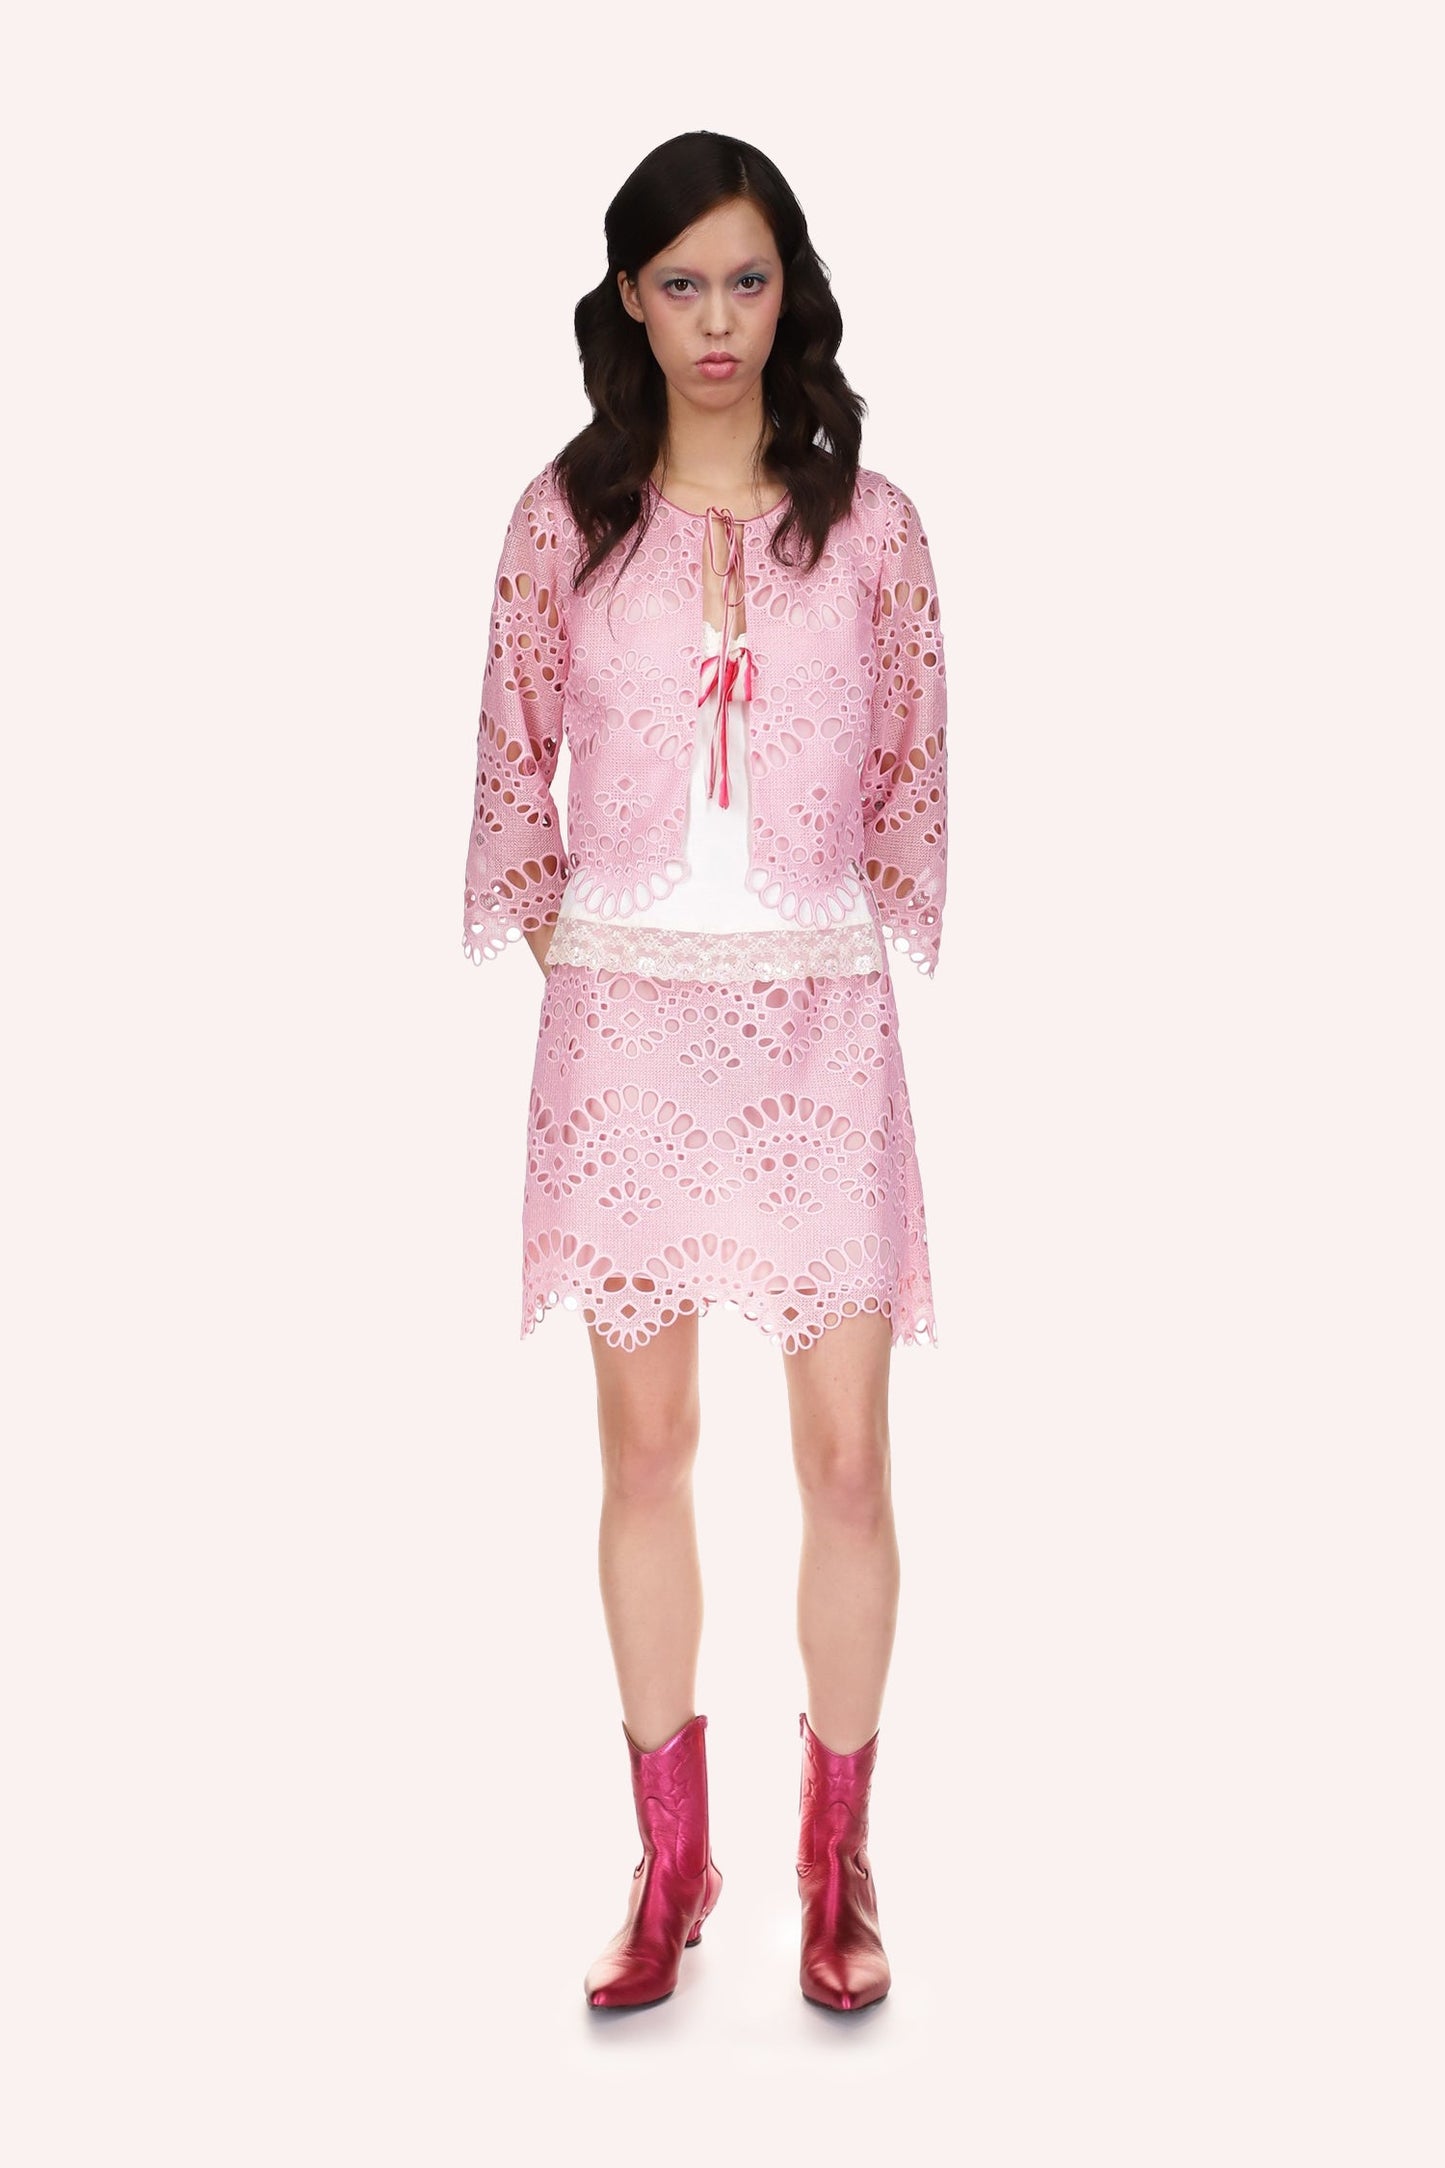 Eyelet Skirt, pink, above knees long, wavy hem with Eyelet shape.